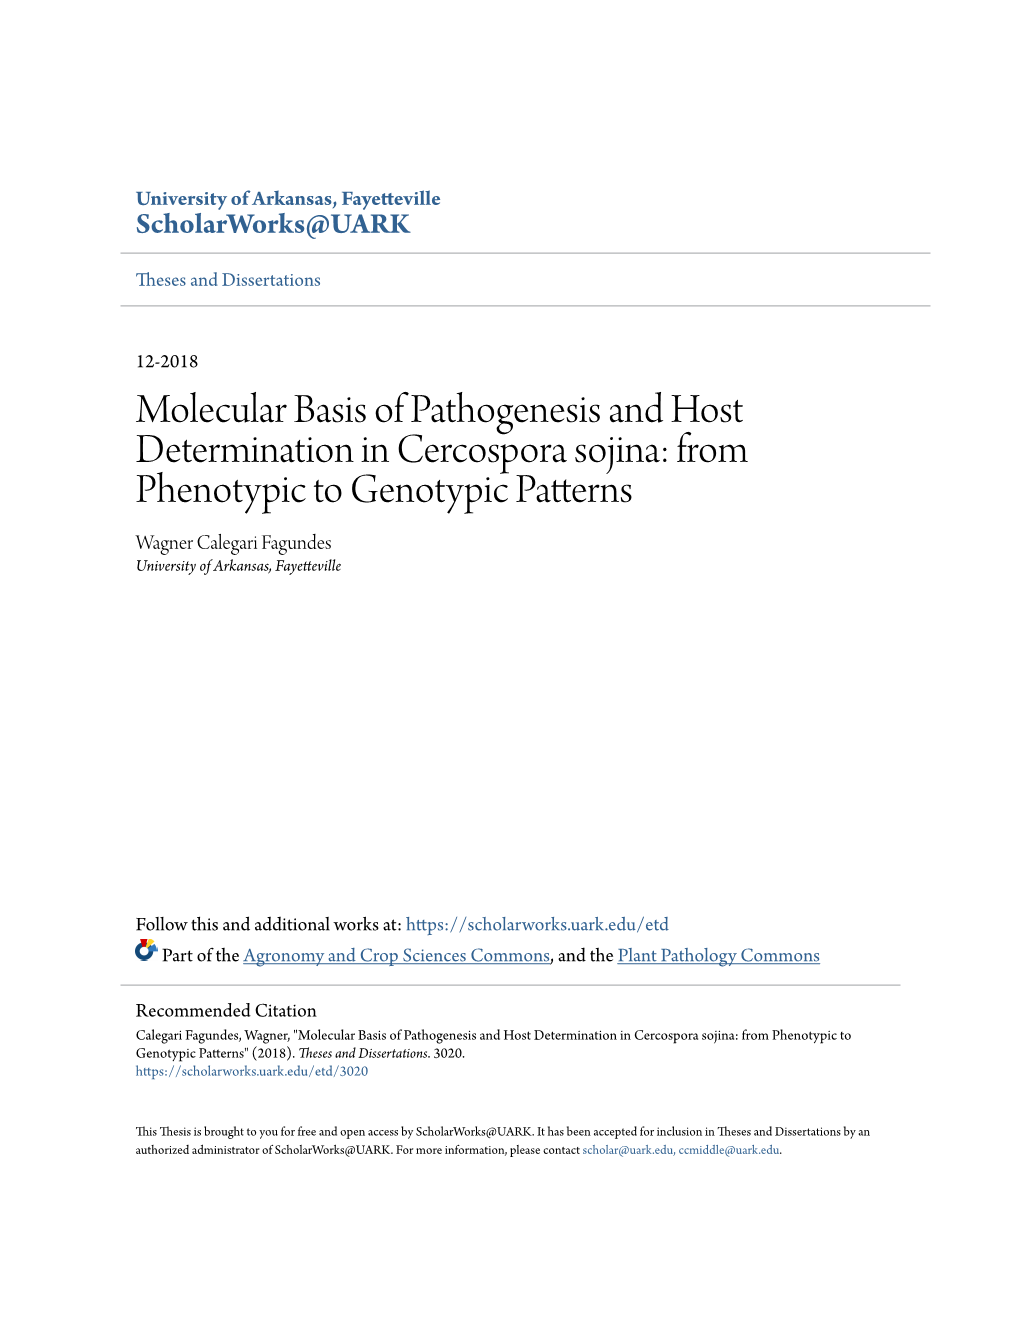 Molecular Basis of Pathogenesis and Host Determination in Cercospora